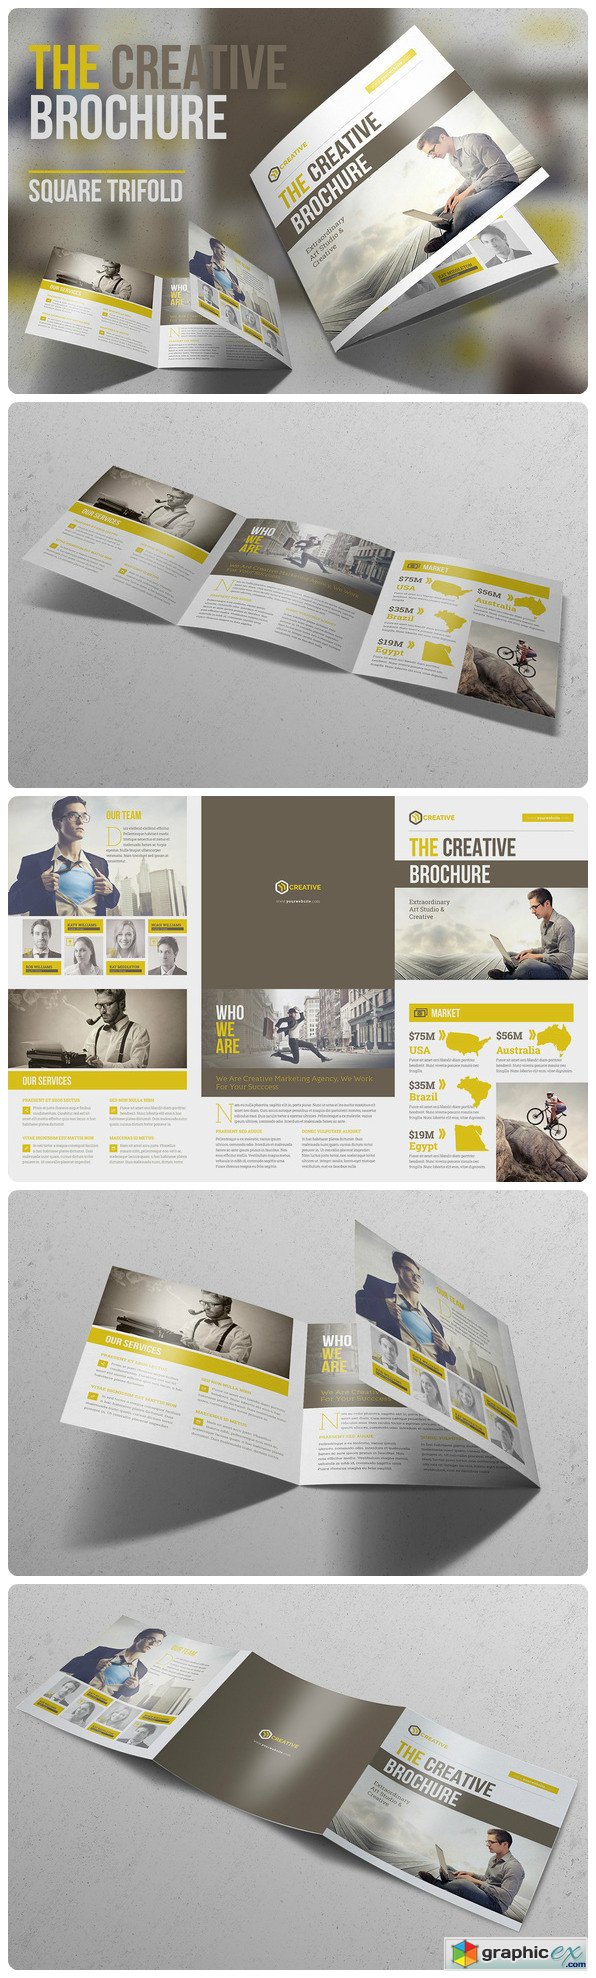 The Creative Brochure - Square 3fold